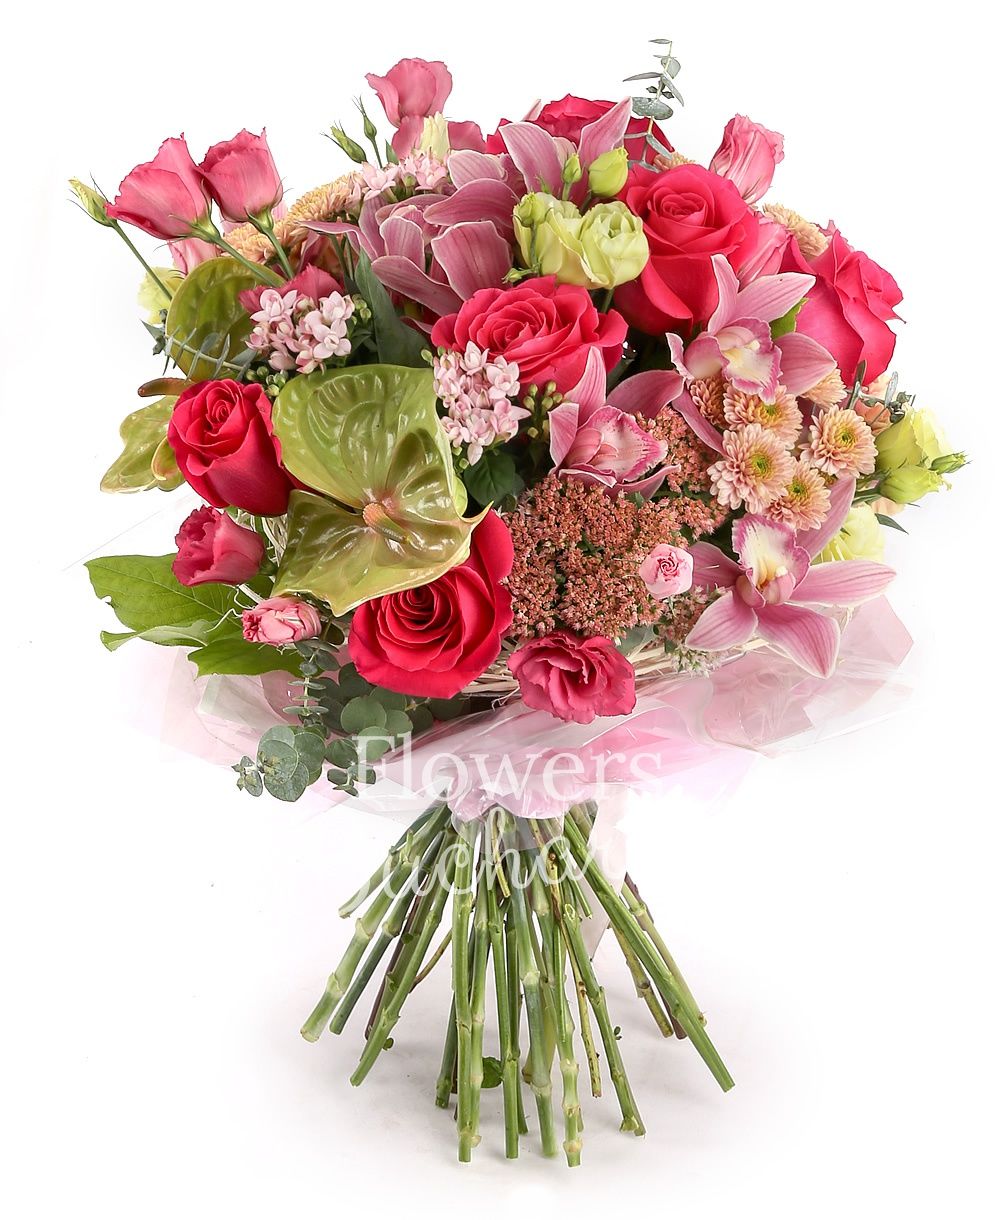 7 cyclam roses, 5 pink lisianthus, 4 pink santini, 7 cream carnations, 3 green lisianthus, 3 sedum, 5 pink bouvardia, 2 green anthurium, pink cymbidium, greenery